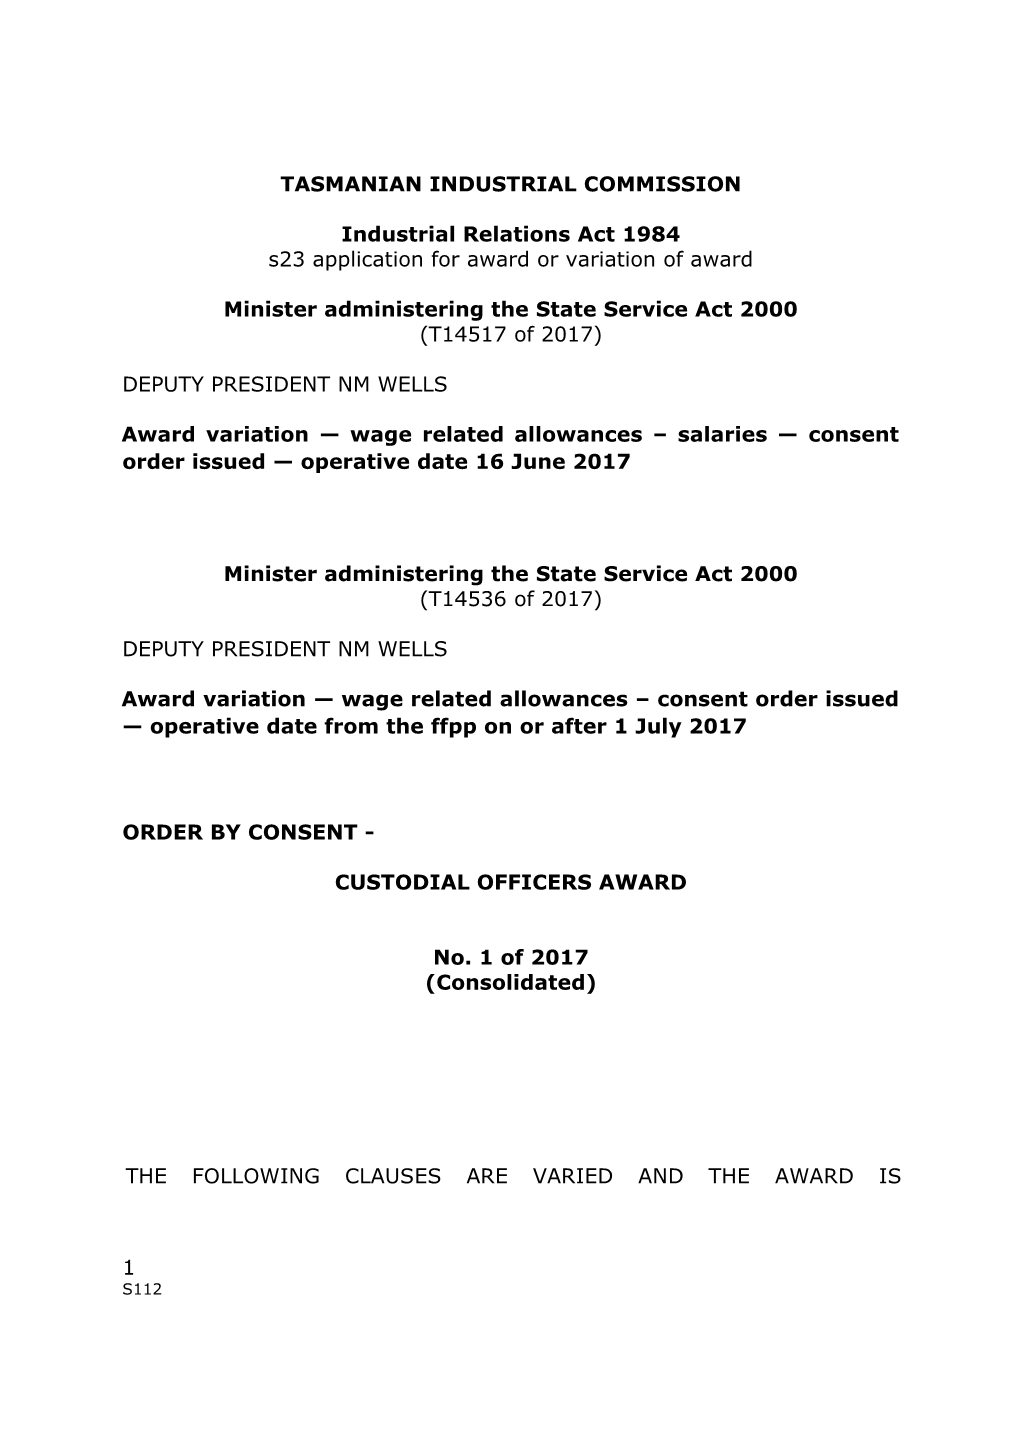 Custodial Officers Award